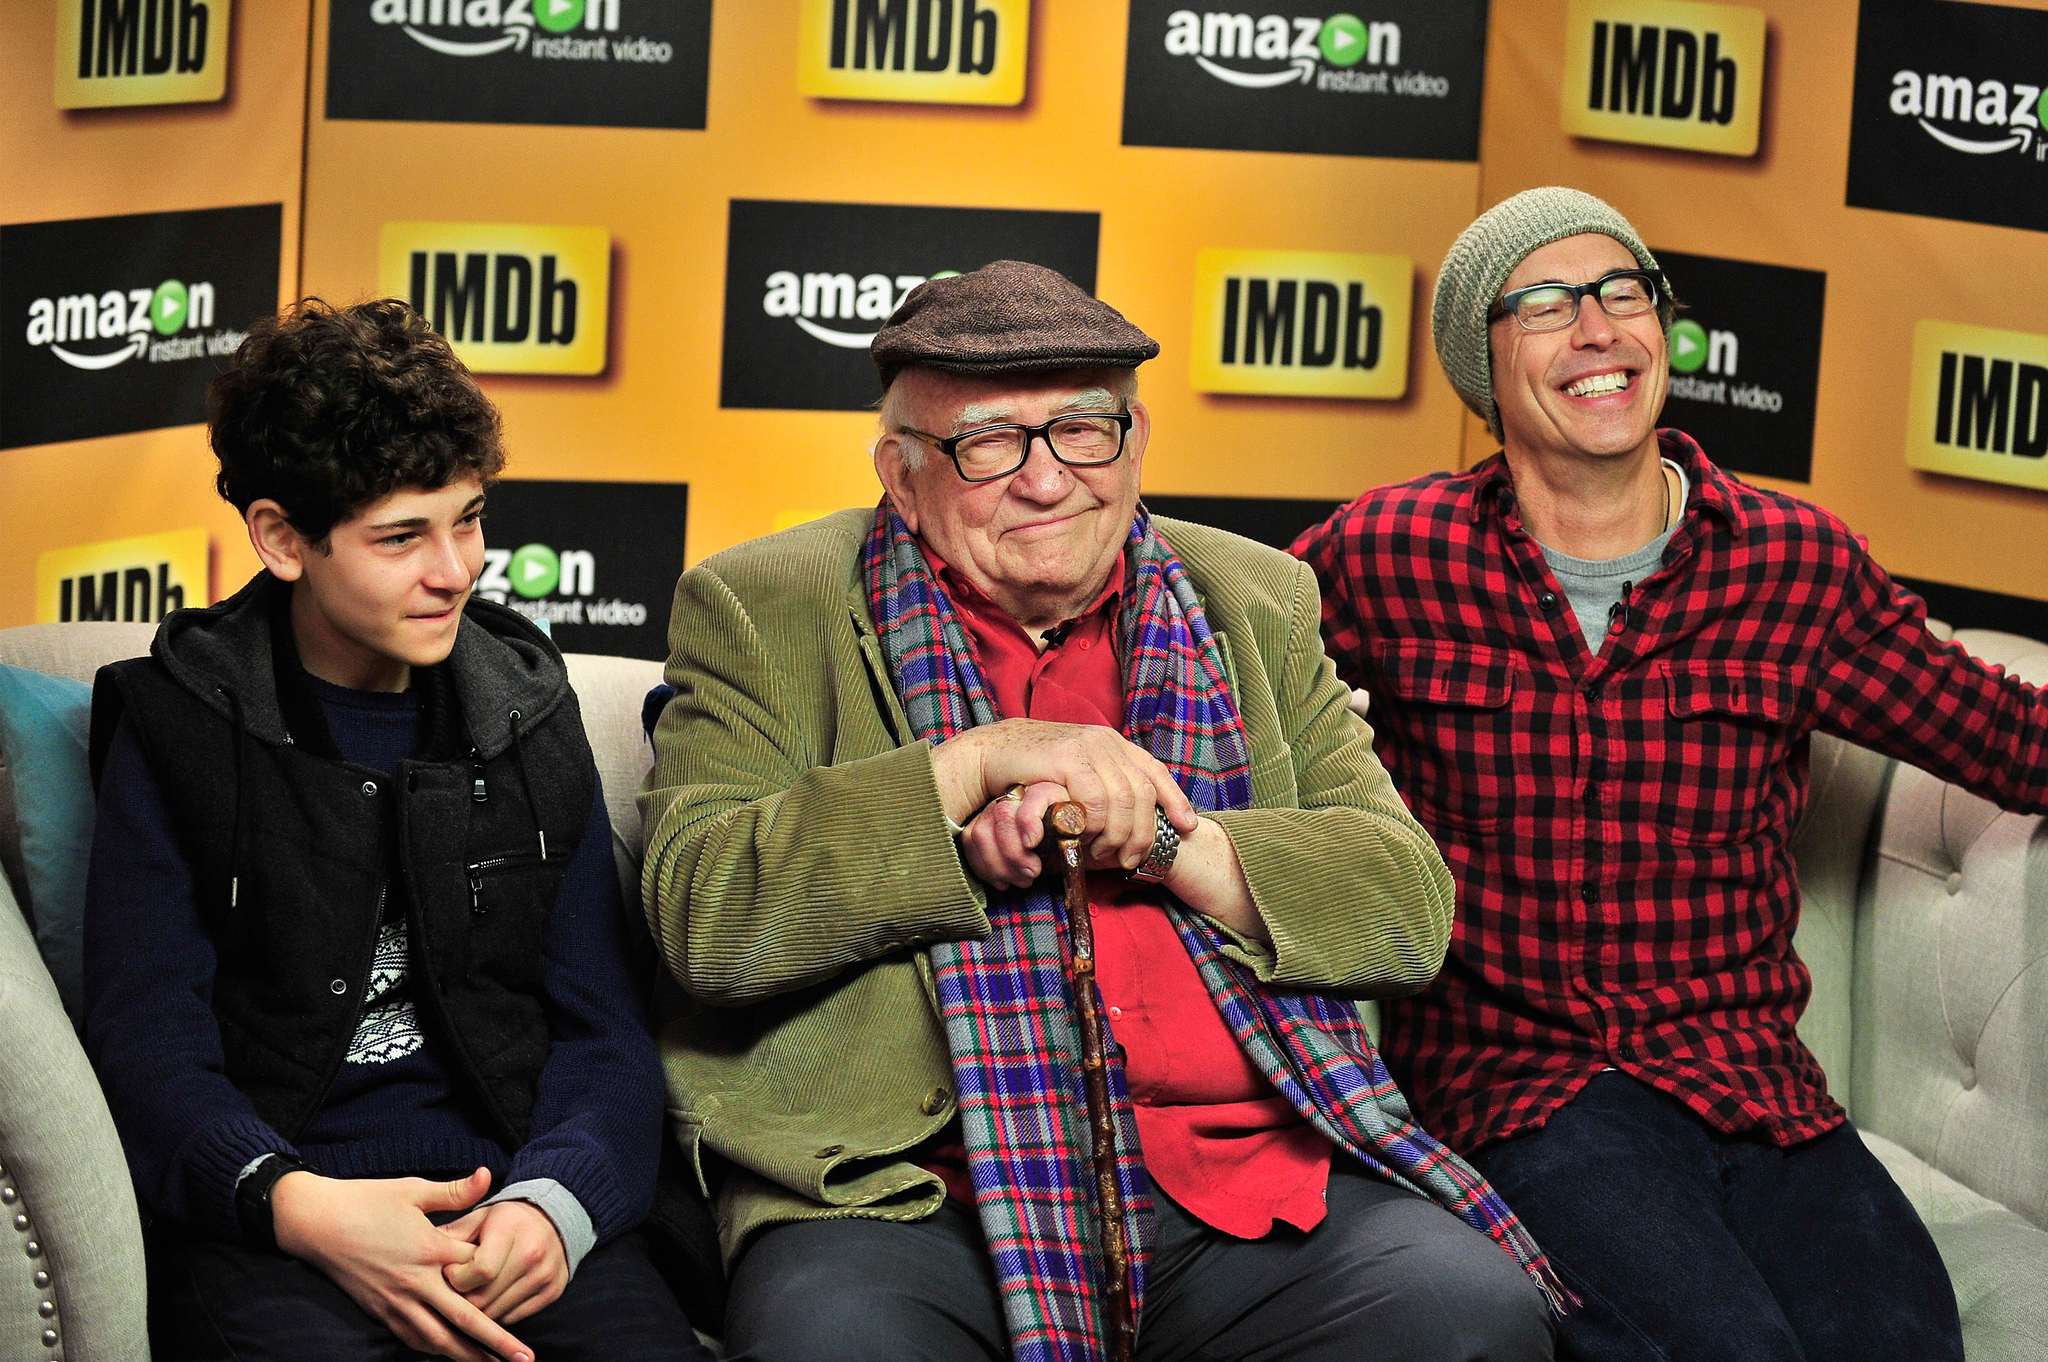 Edward Asner, Tom Cavanagh and David Mazouz at event of The IMDb Studio (2015)